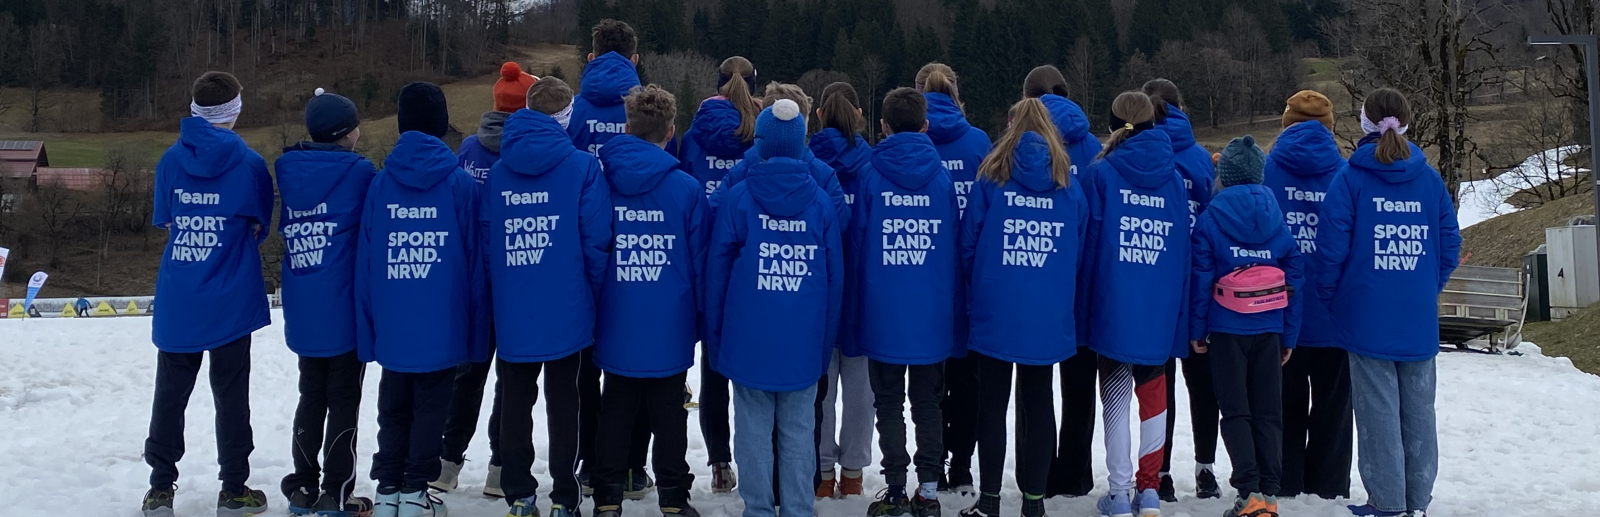 Das Team aus dem Sportland.NRW